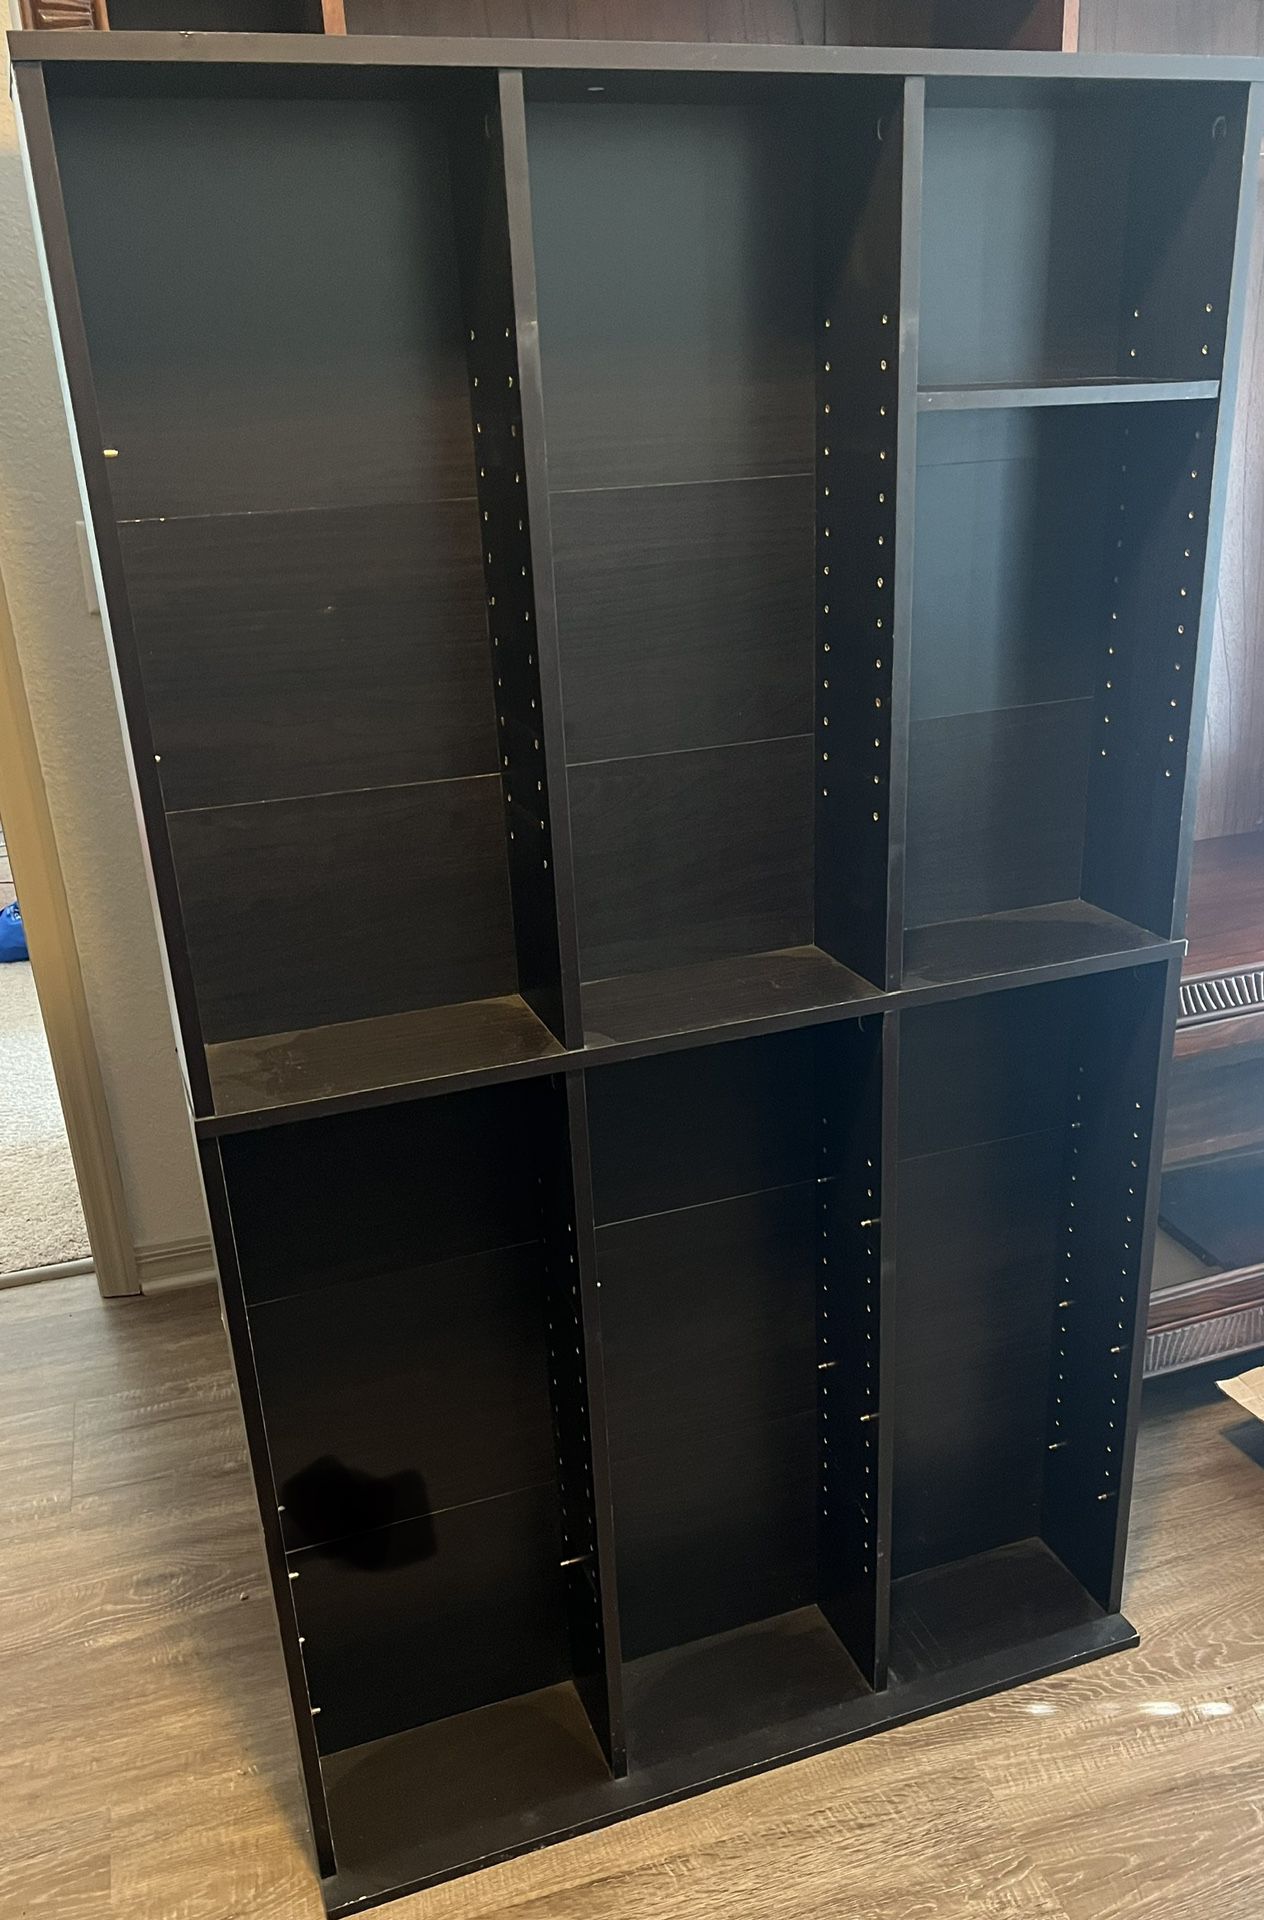 Knick Knack Shelving Unit with 20 Adjustable Shelves